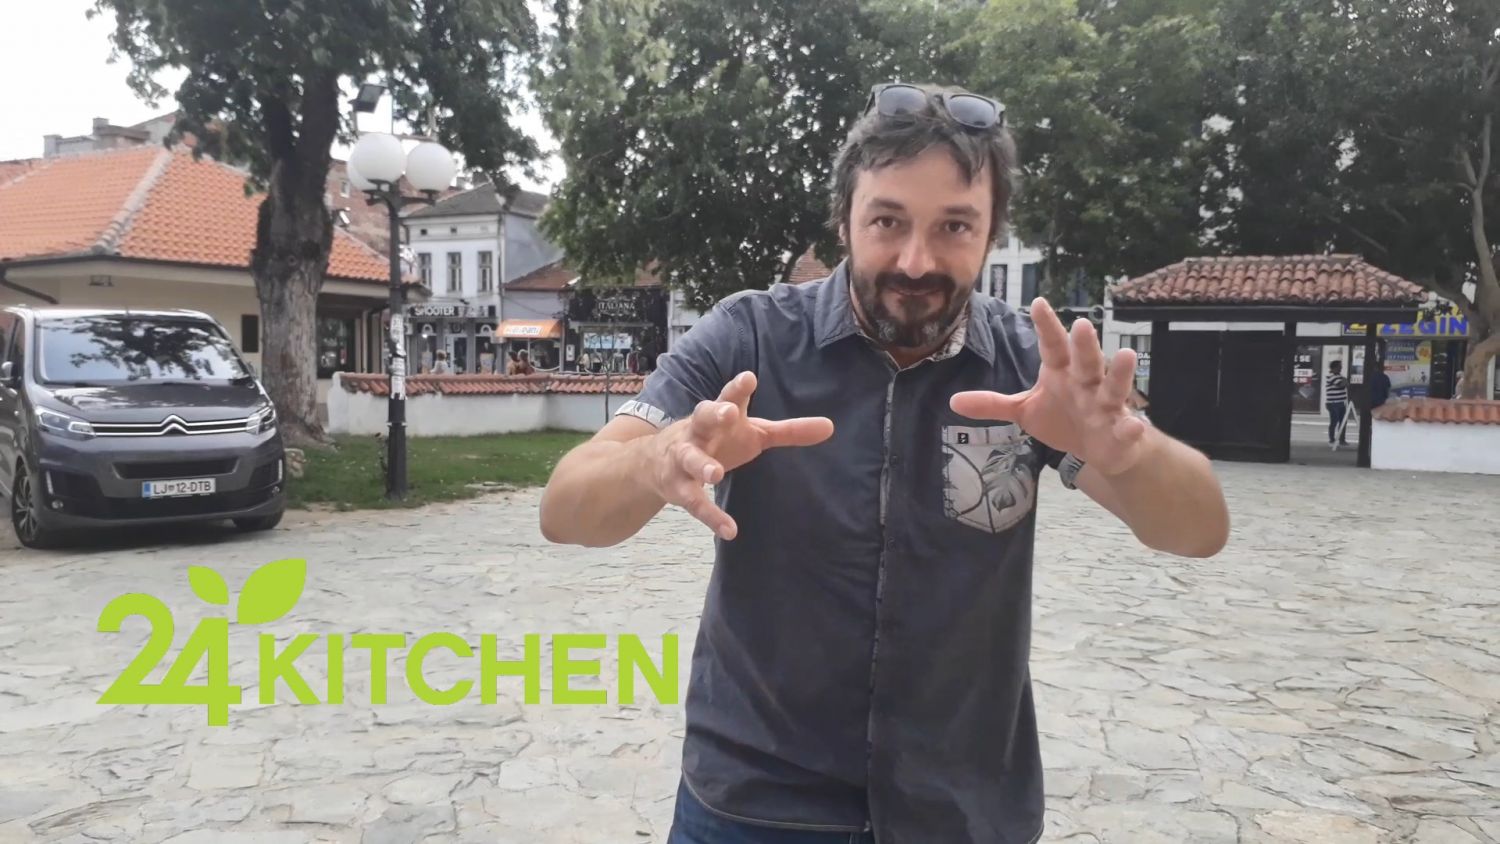 Ako ste propustili, evo kako je predstavljen Leskovac na kanalu 24Kitchen (VIDEO)